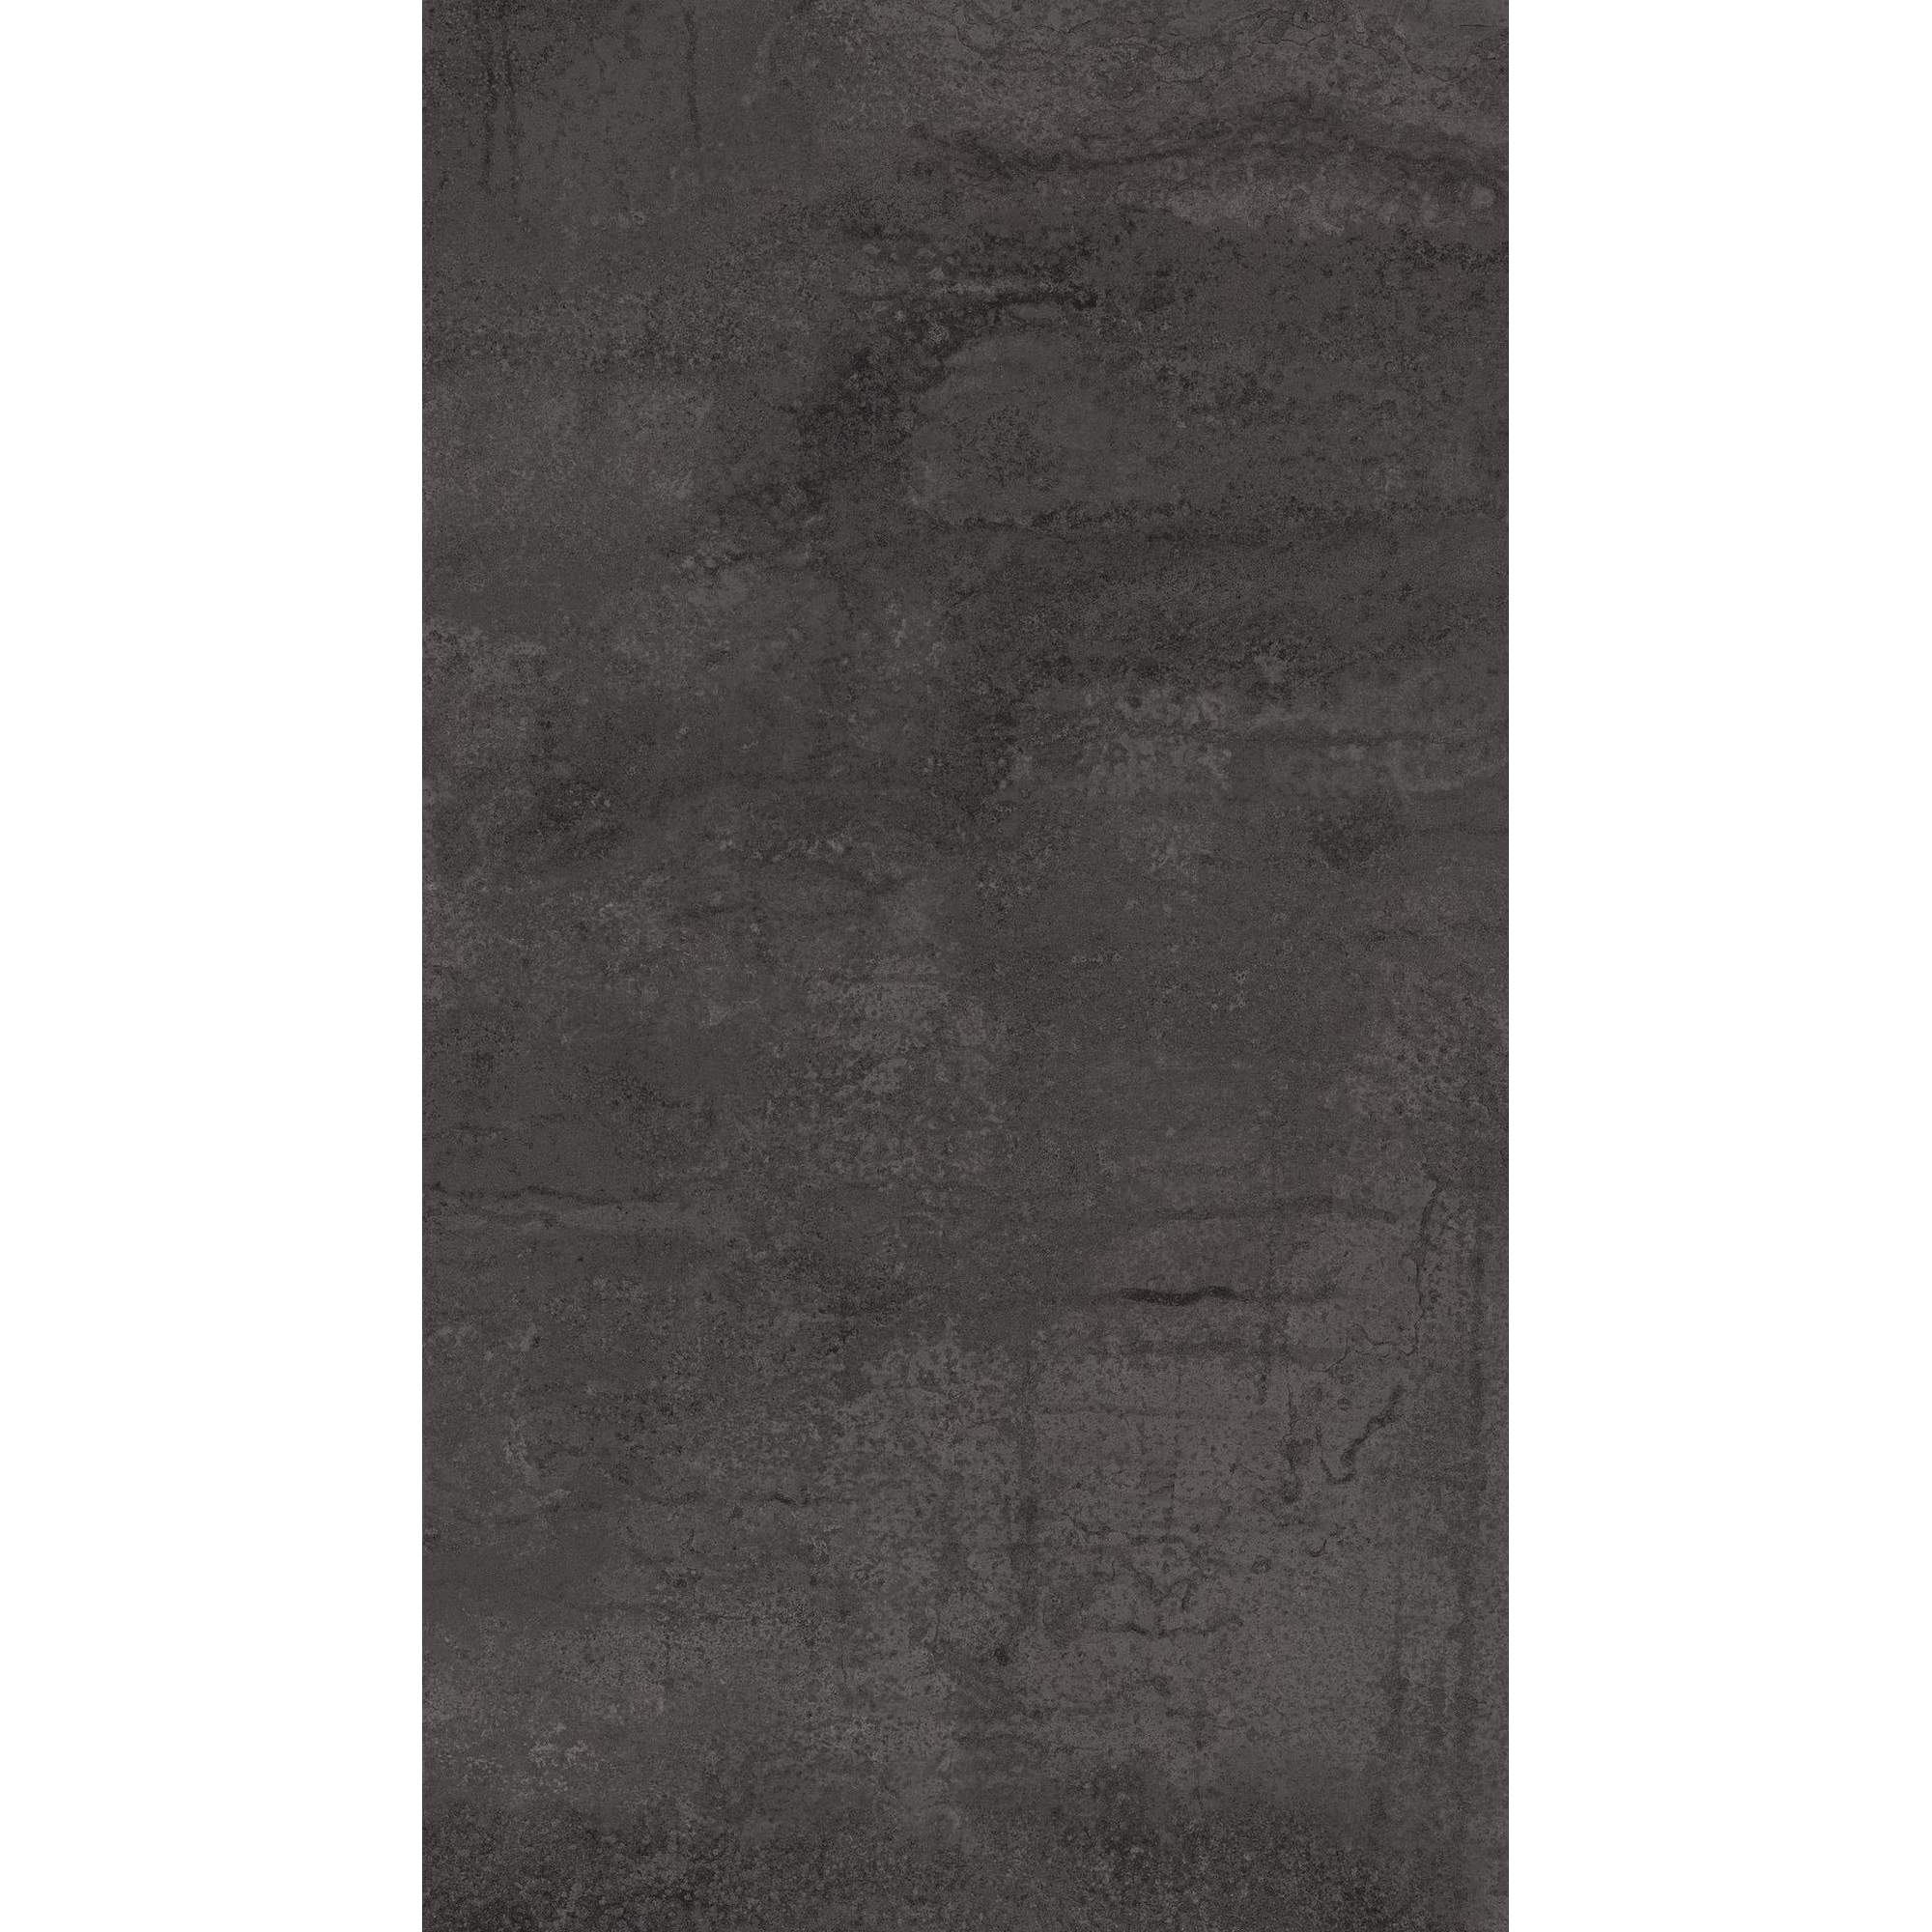 Arbeitsplatte 'K4399' Rusty Iron Ocean grau 4100 x 900 x 38 mm + product picture